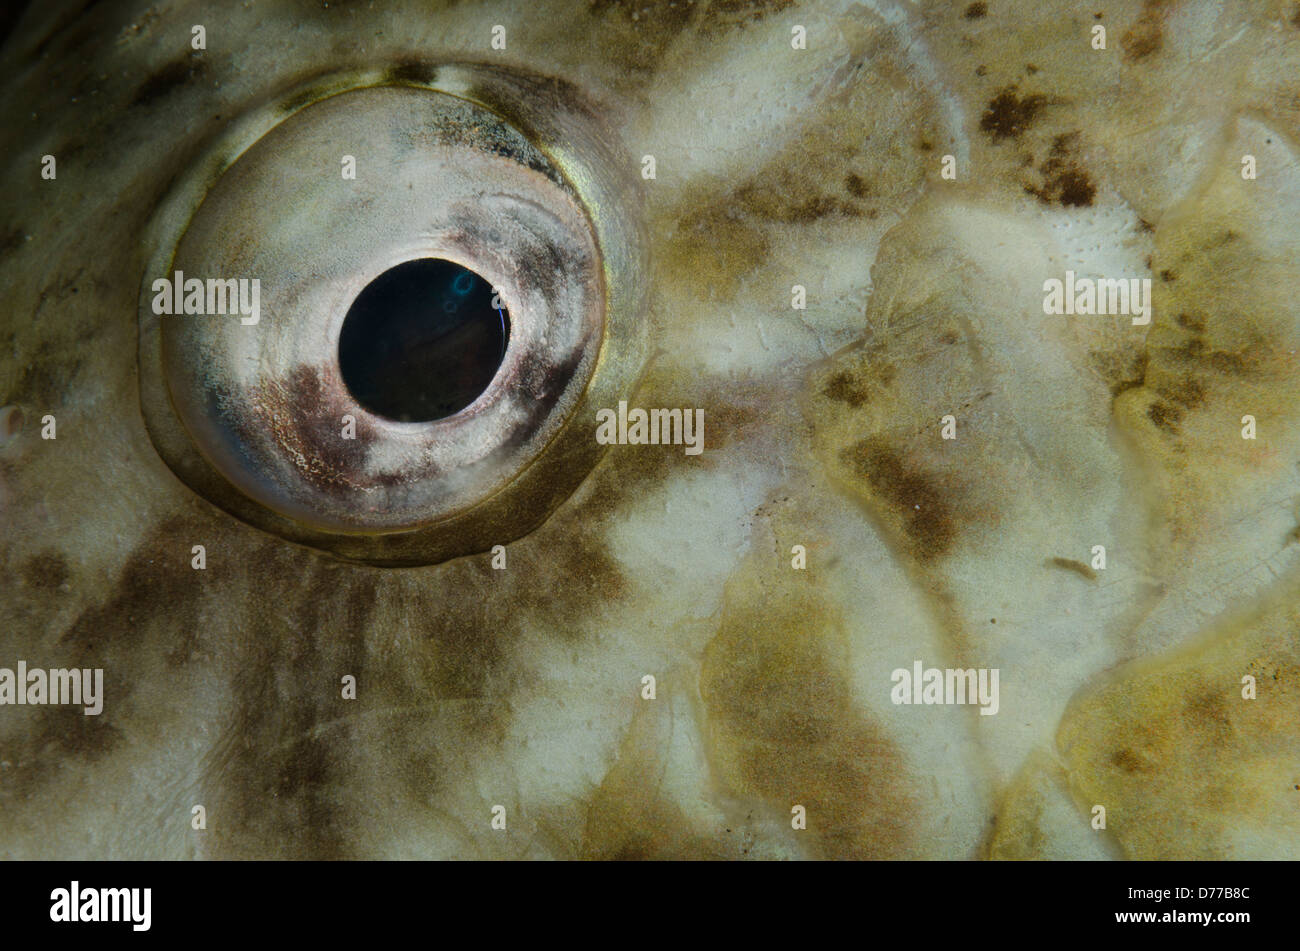 A close up shot of a parrotfish eyeball Stock Photo